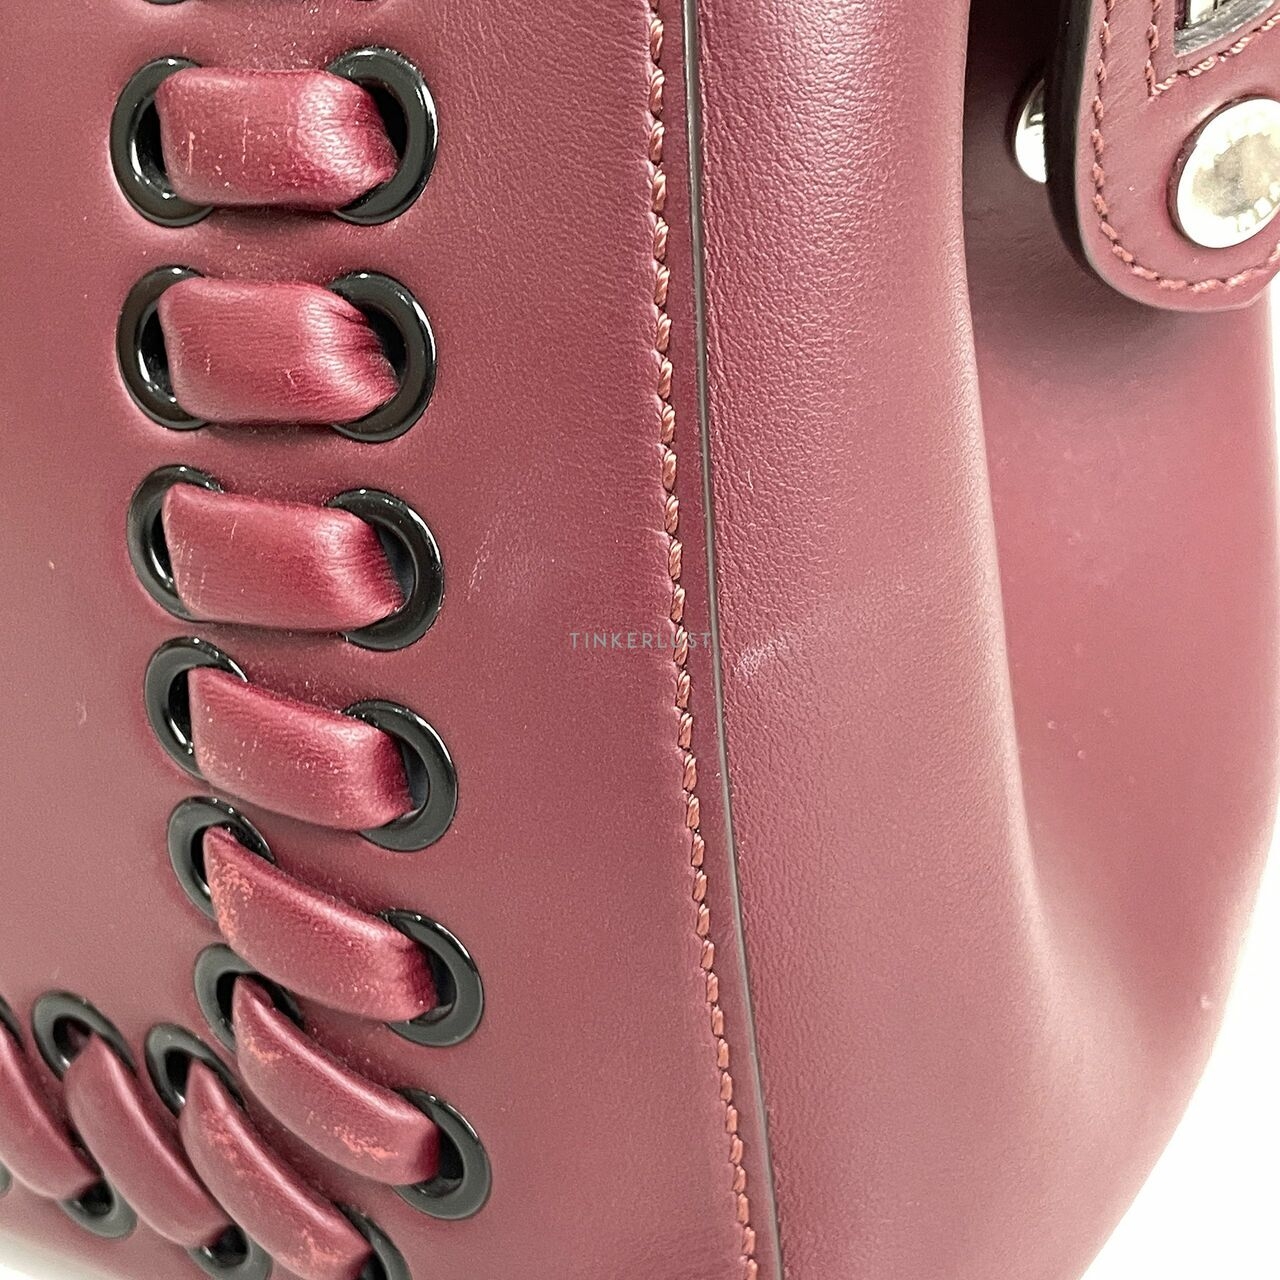 Fendi Burgundy Leather Whipstitch Dotcom Top Handle Bag